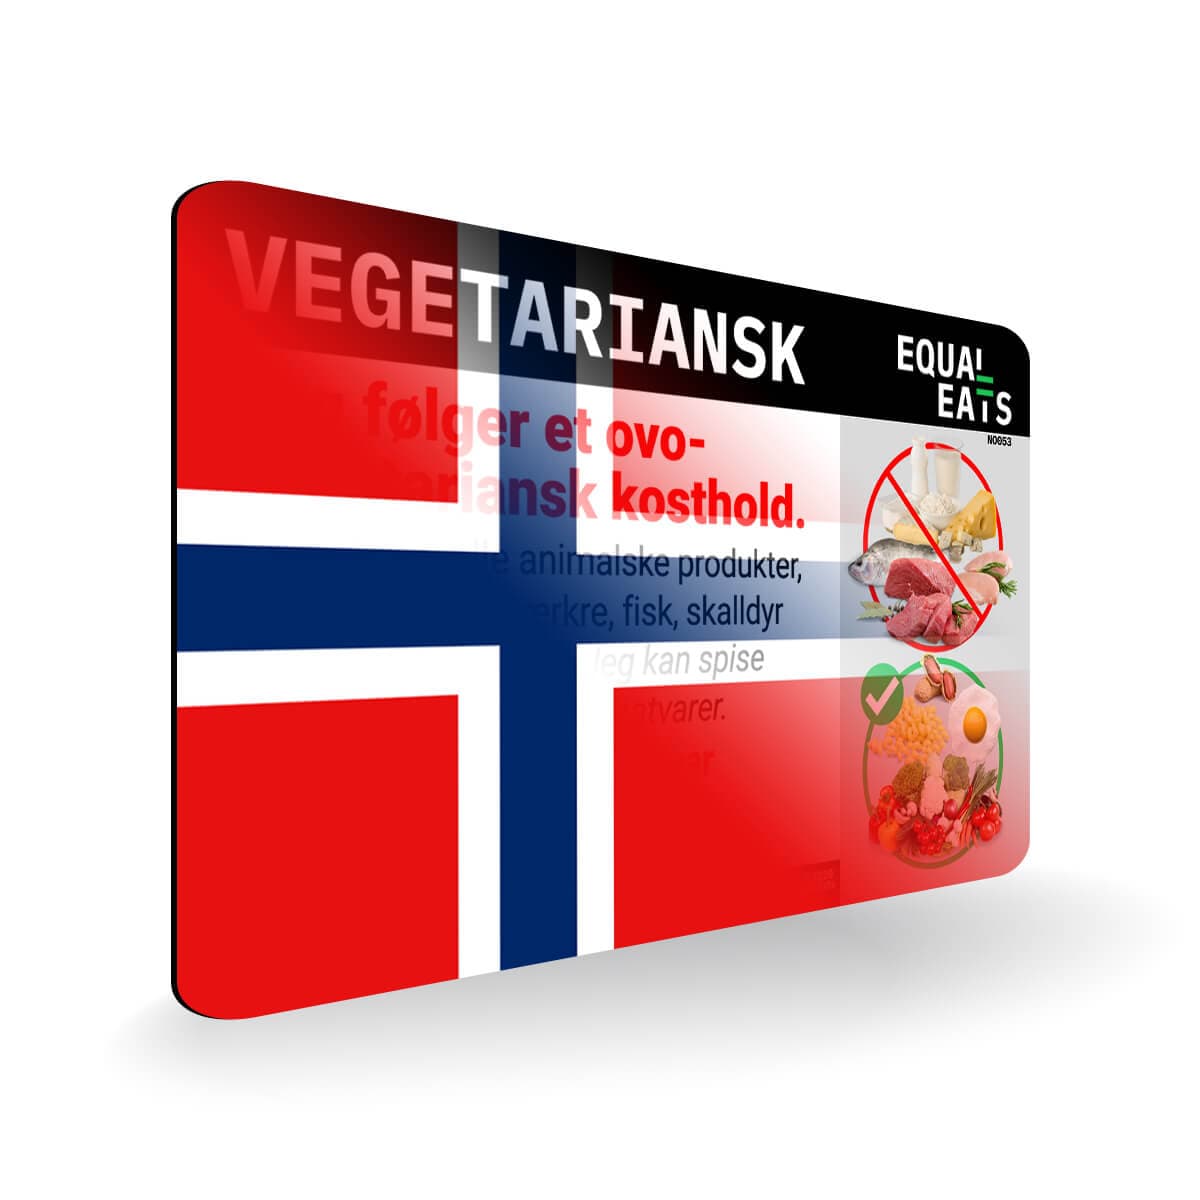 Ovo Vegetarian in Norwegian. Card for Vegetarian in Norway